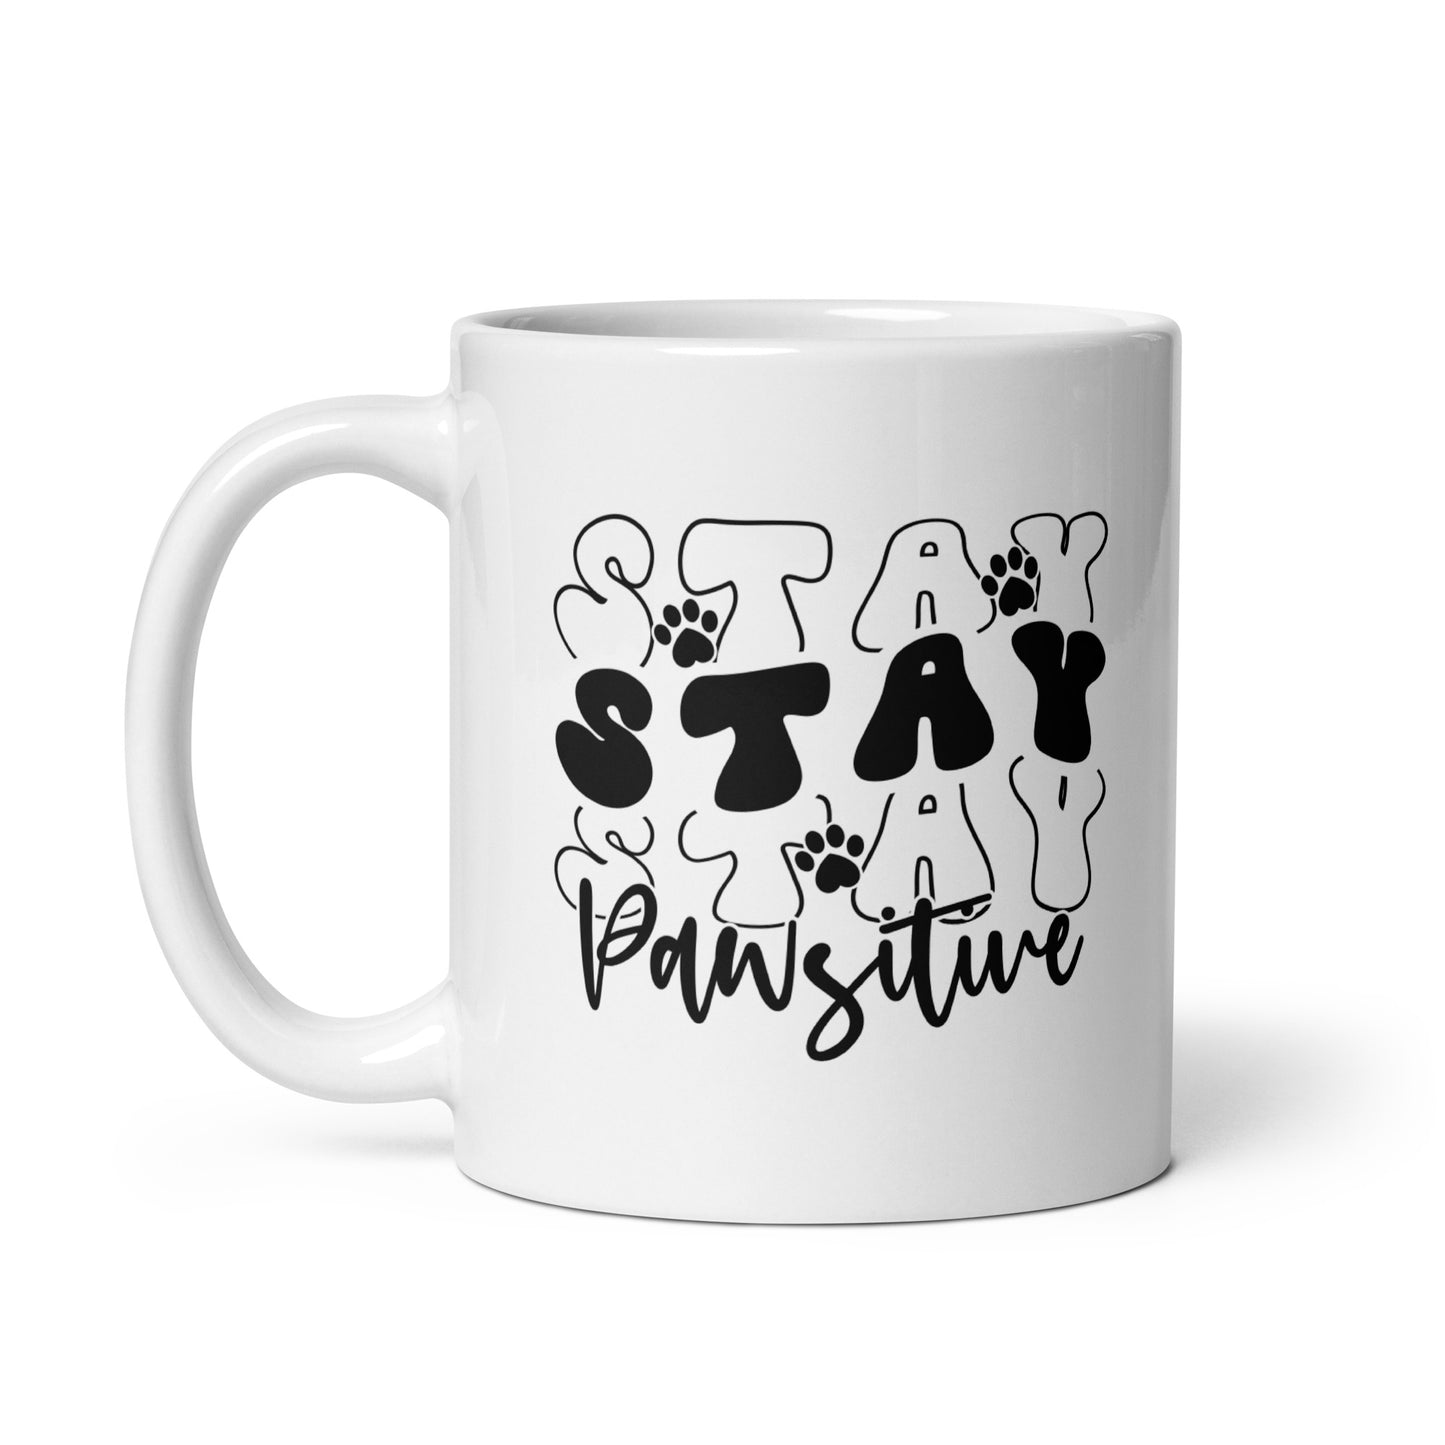 Stay Stay Stay Pawsitive Coffee Mug